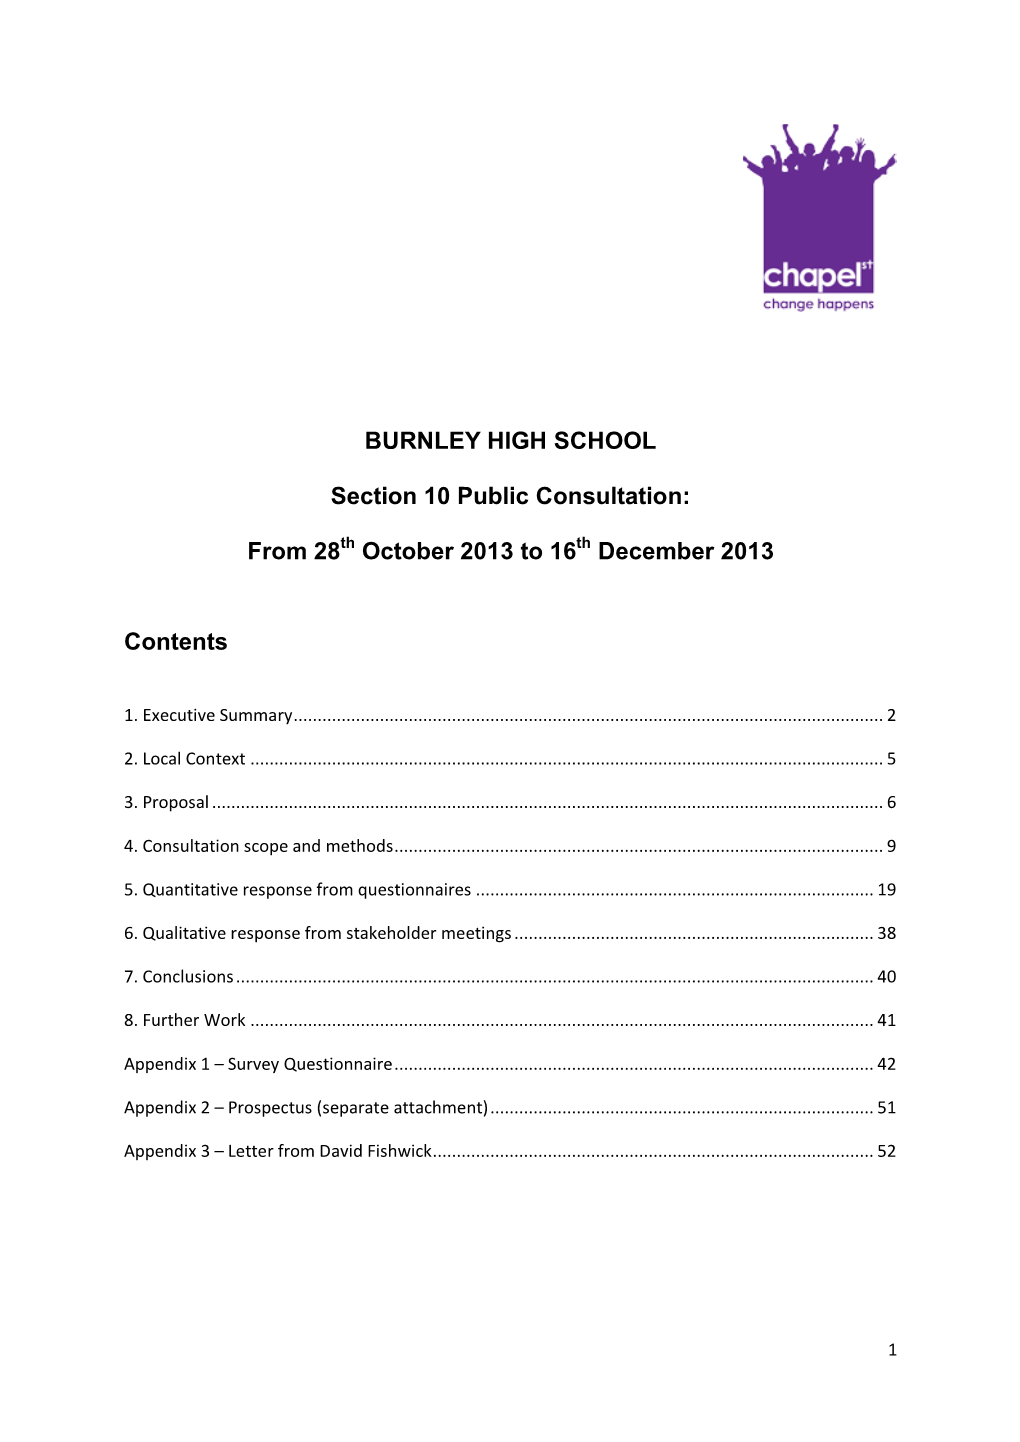 BURNLEY HIGH SCHOOL Section 10 Public Consultation